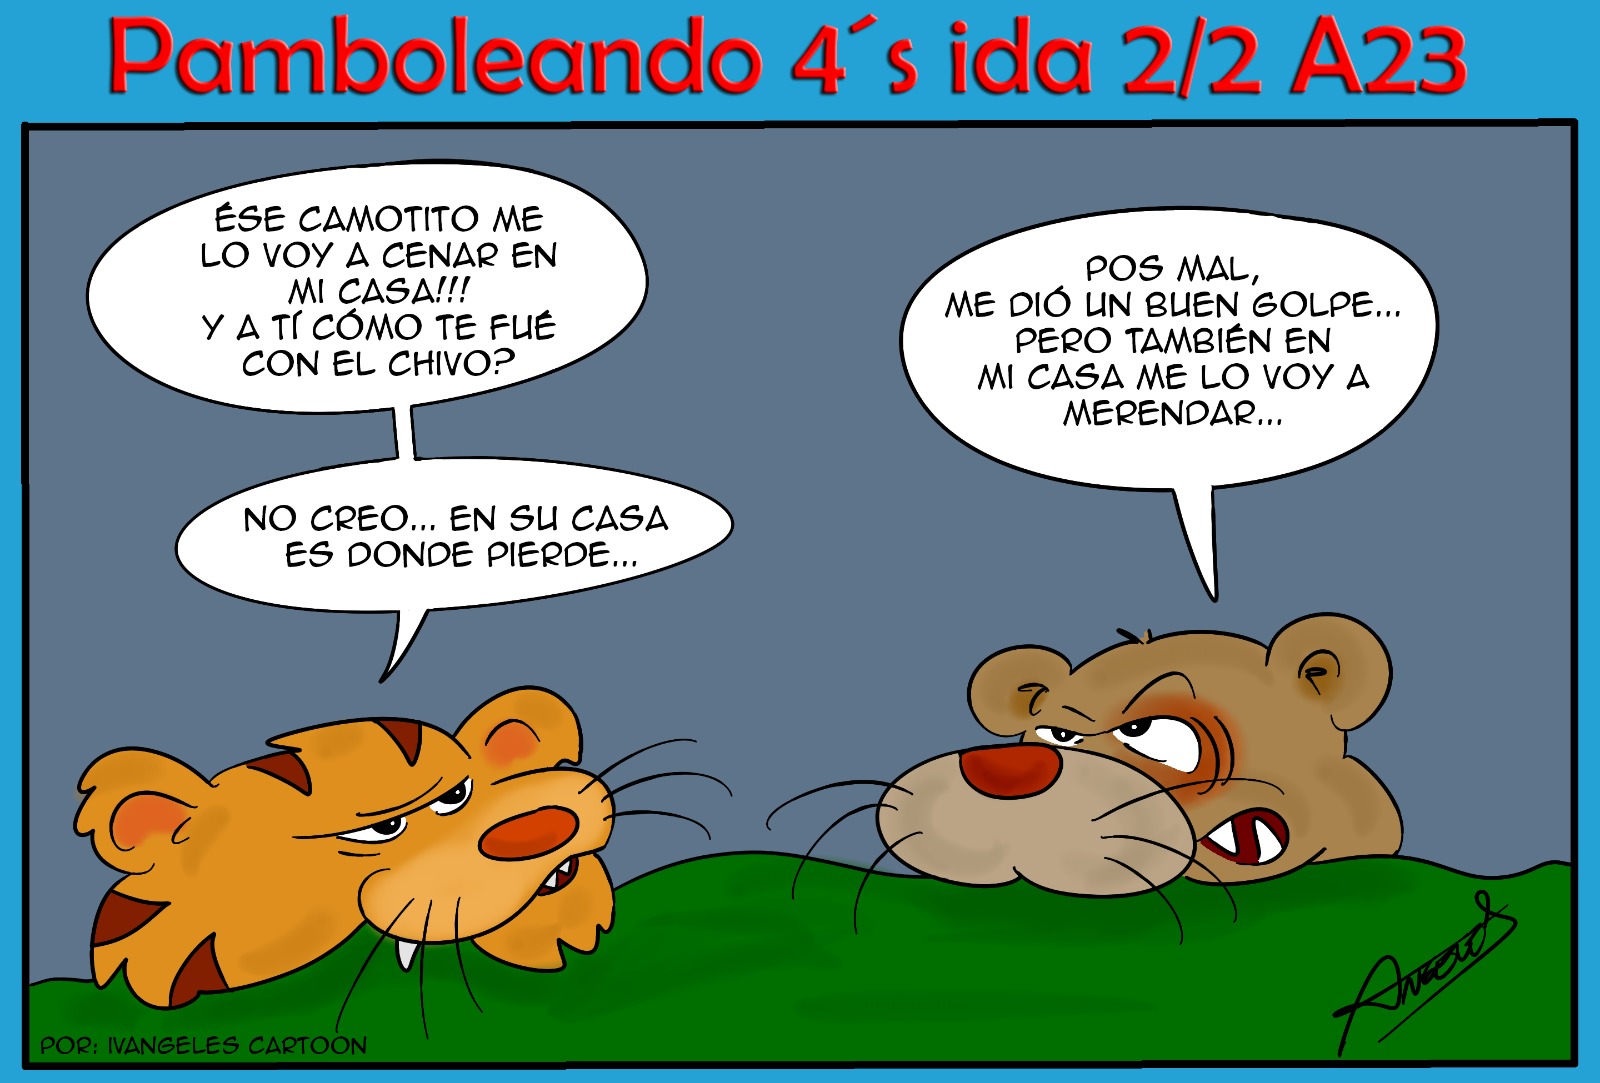 Pamboleando 4's Ida A 23